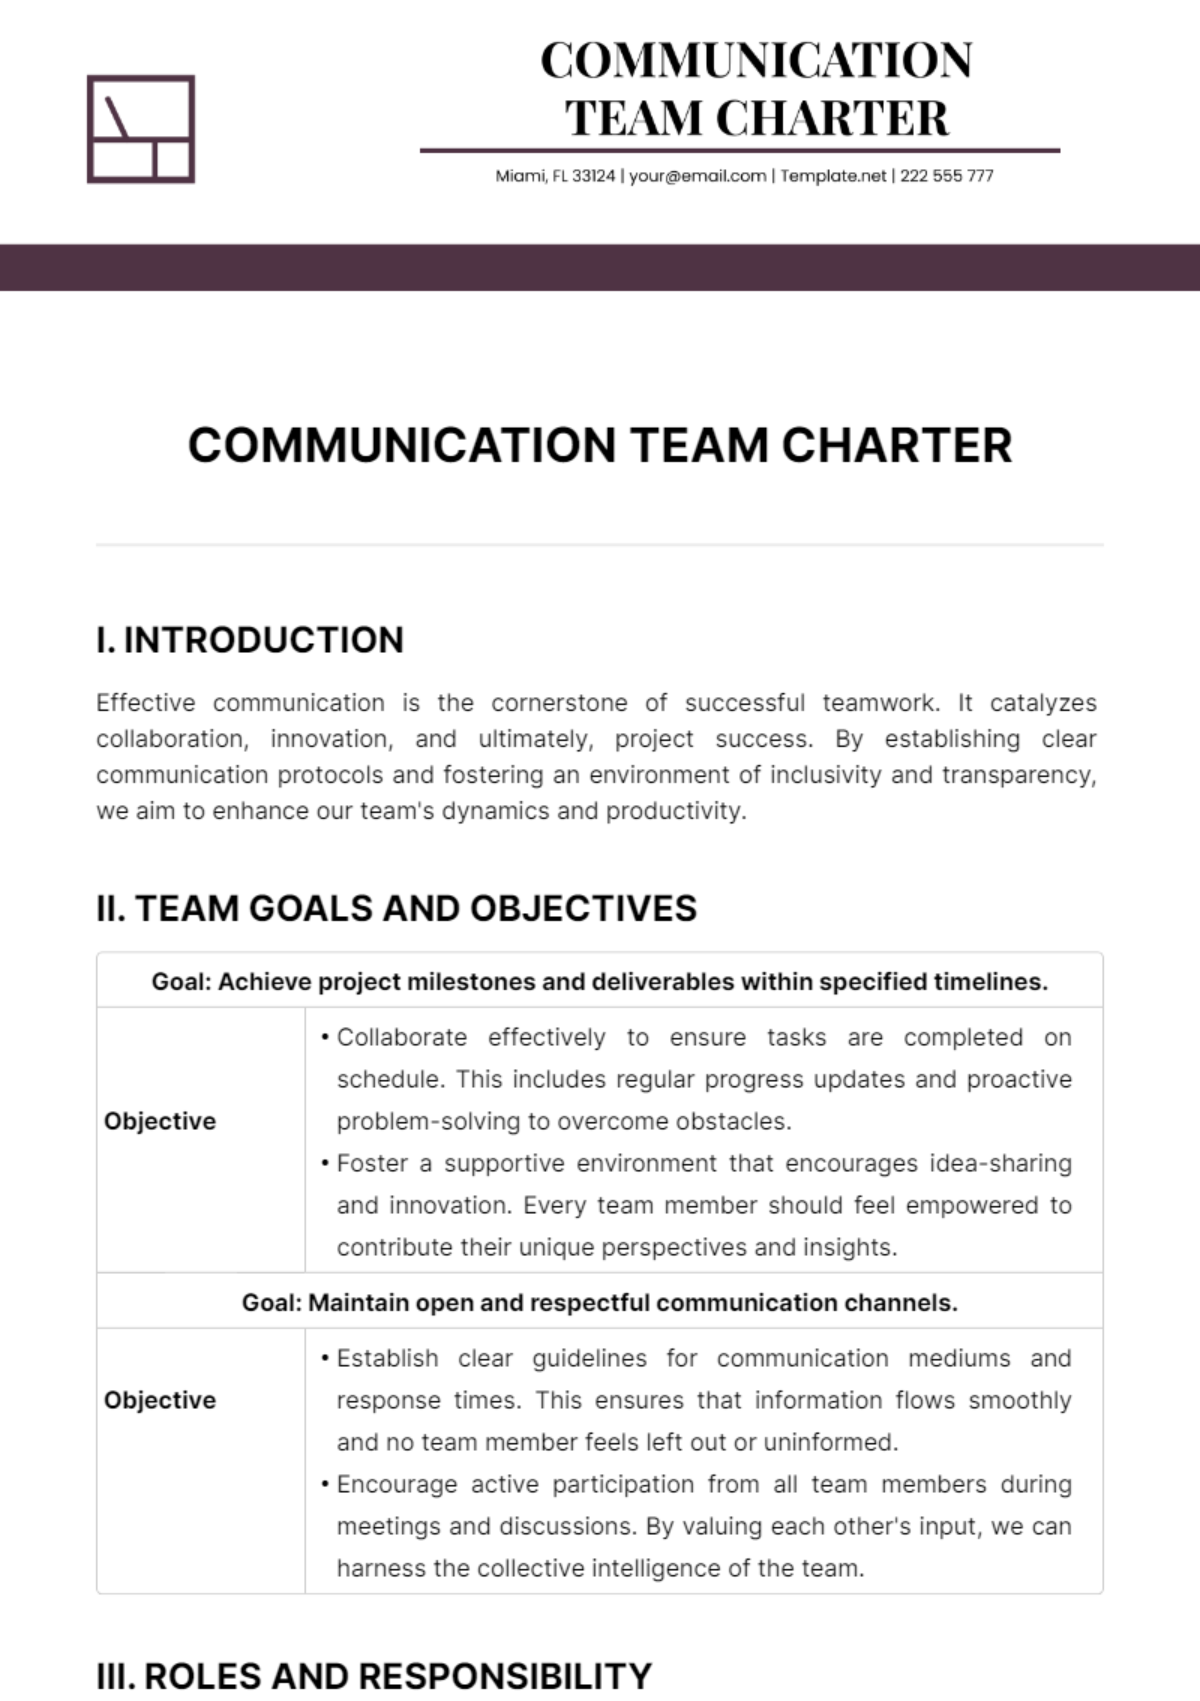 Communication Team Charter Template